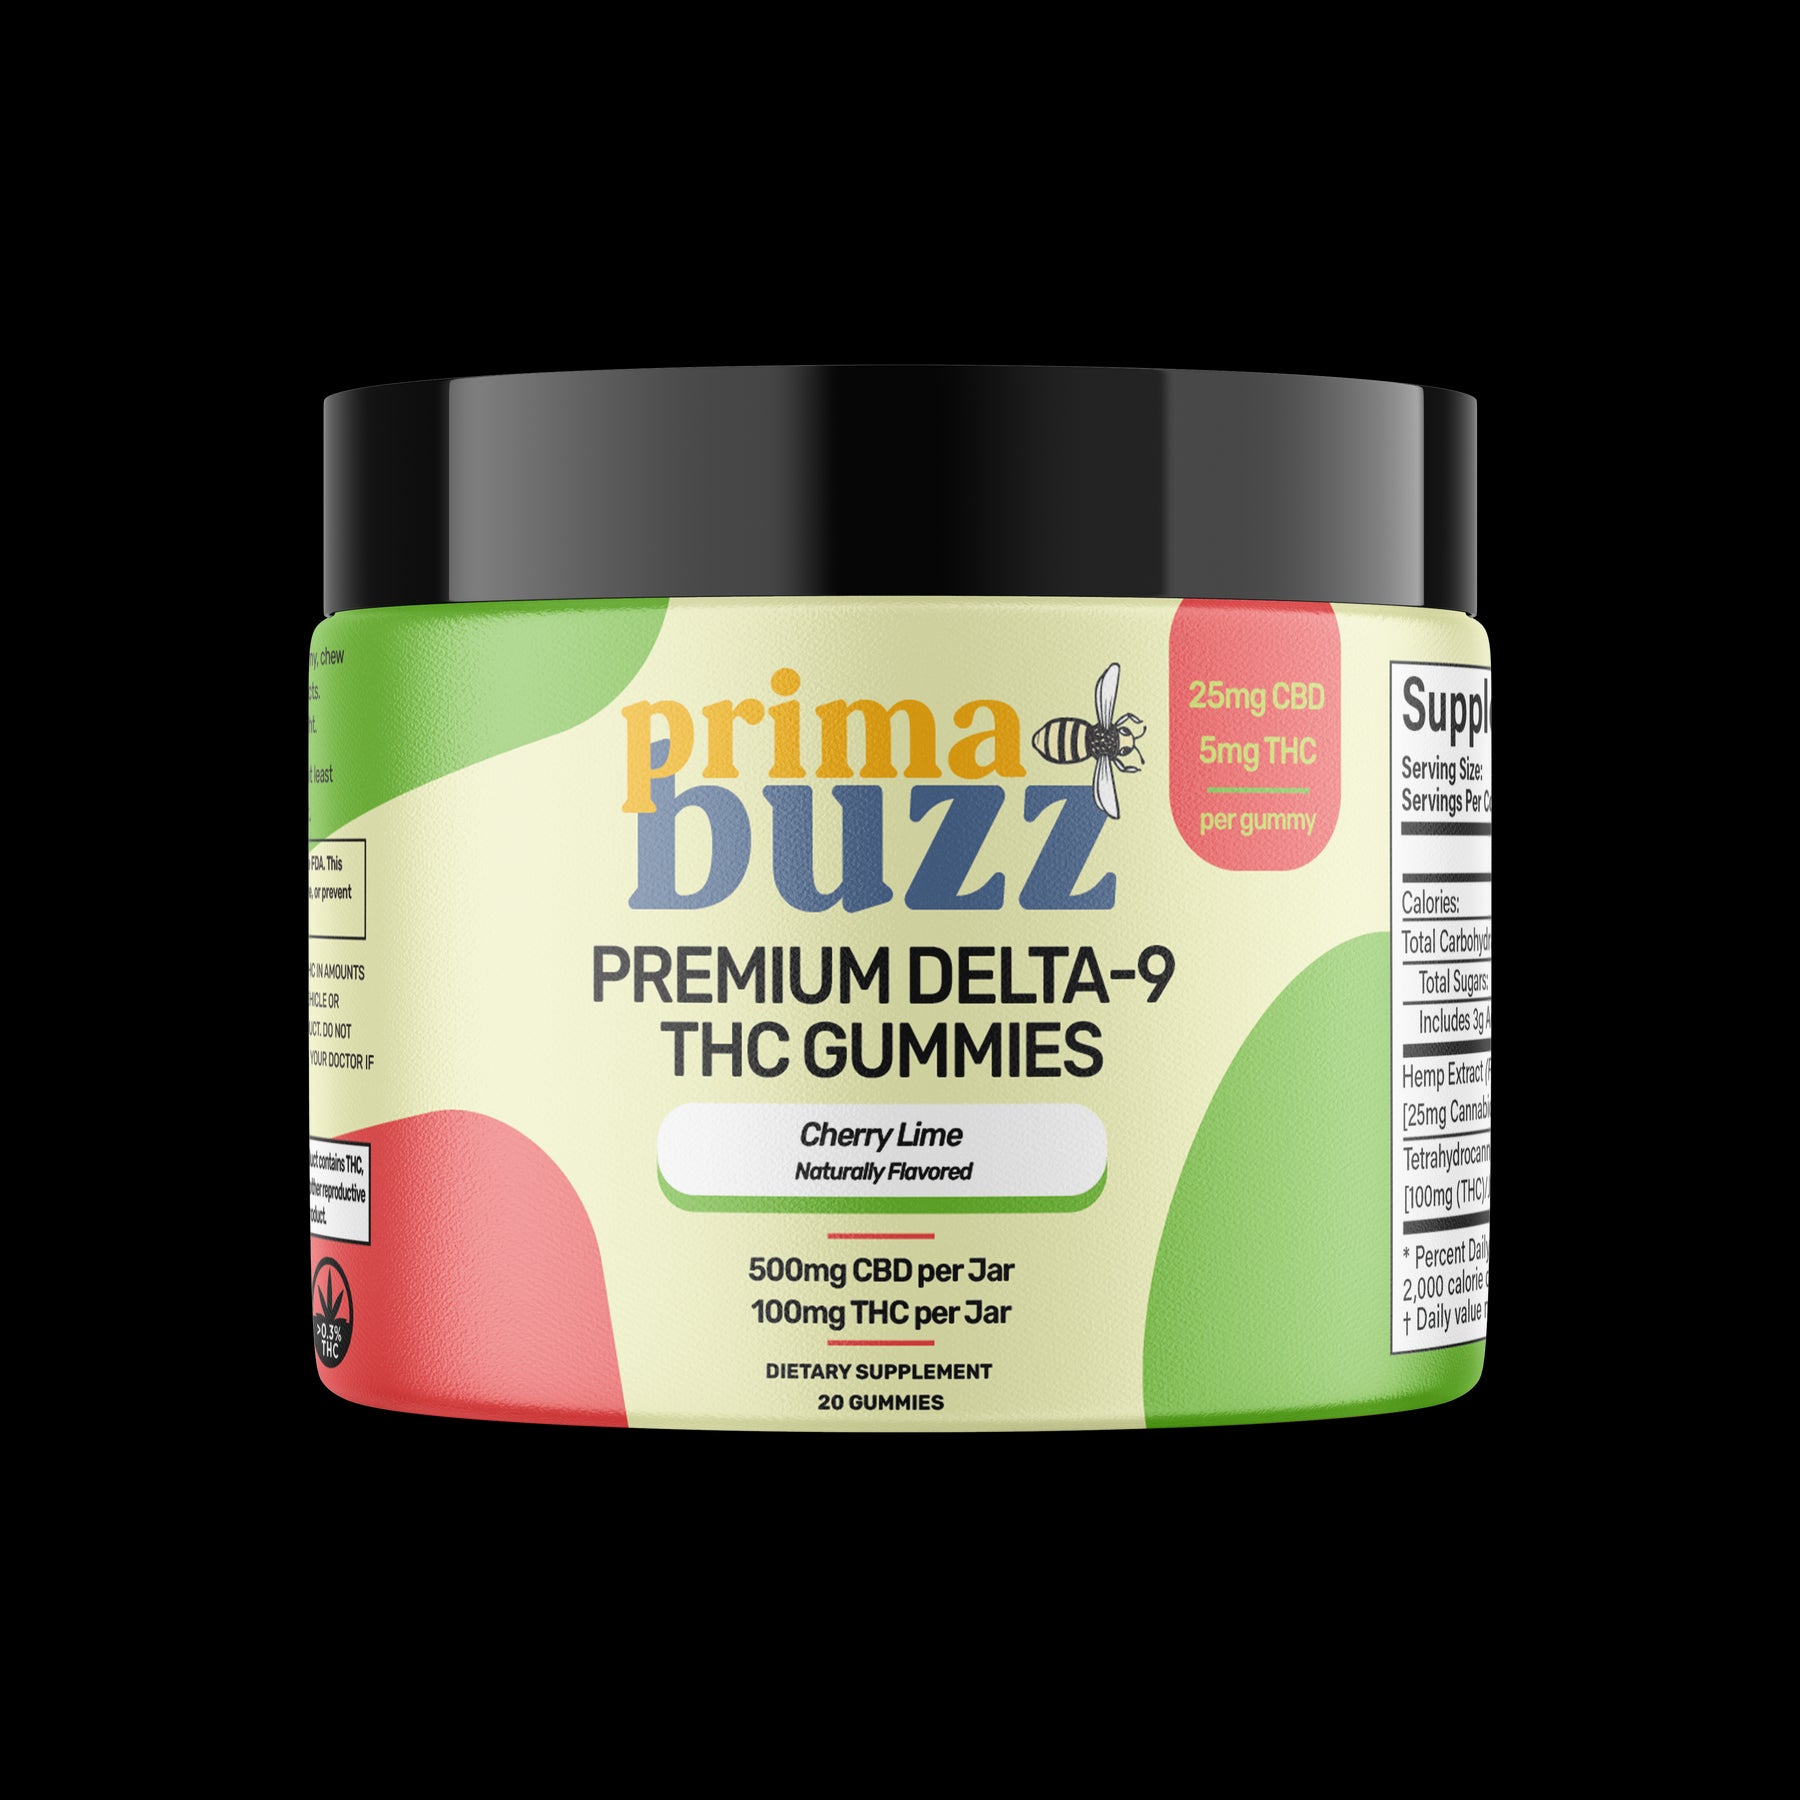 PrimaBuzz Premium Delta-9 THC Gummies 25mg CBD 5mg THC Cherry Lime